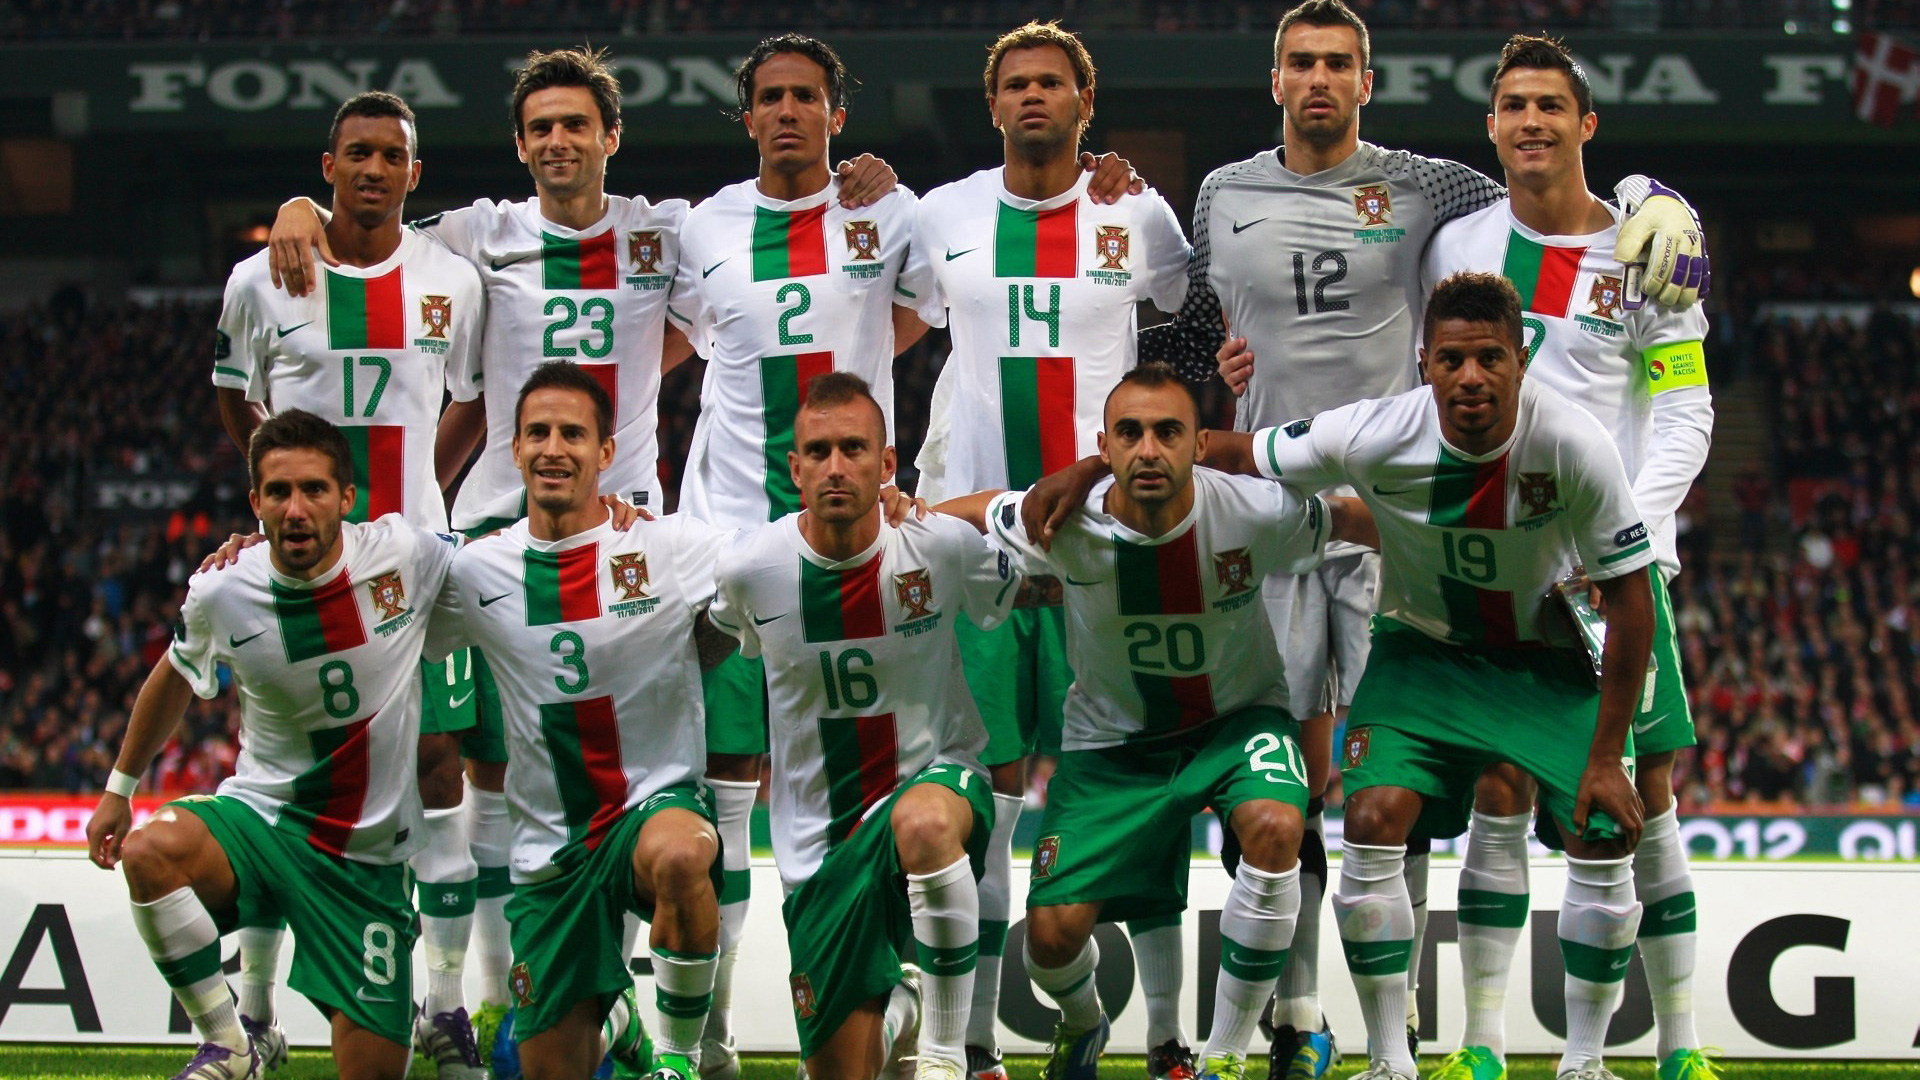 Portugal Football Team Wallpapers | Free HD Desktop Wallpapers ...